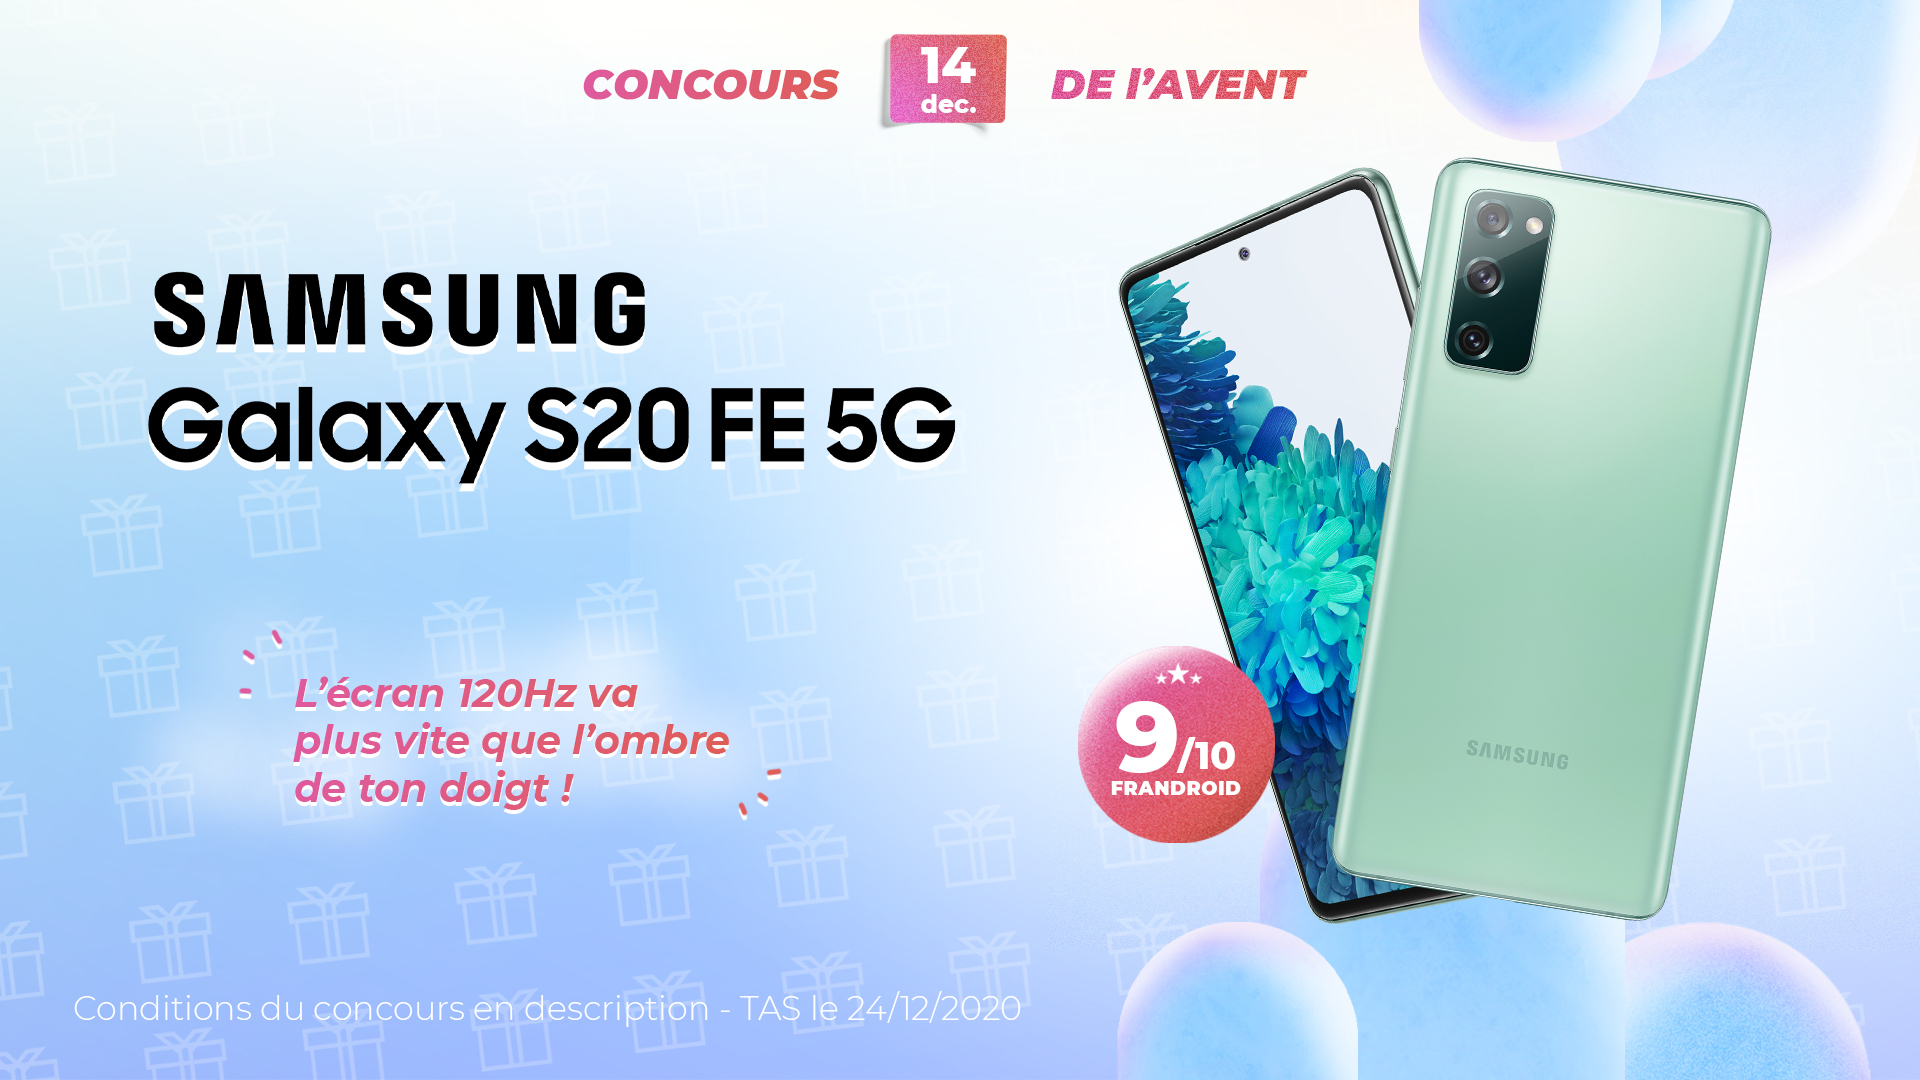 FrandroidOffreMoi un Samsung Galaxy S20 FE 5G